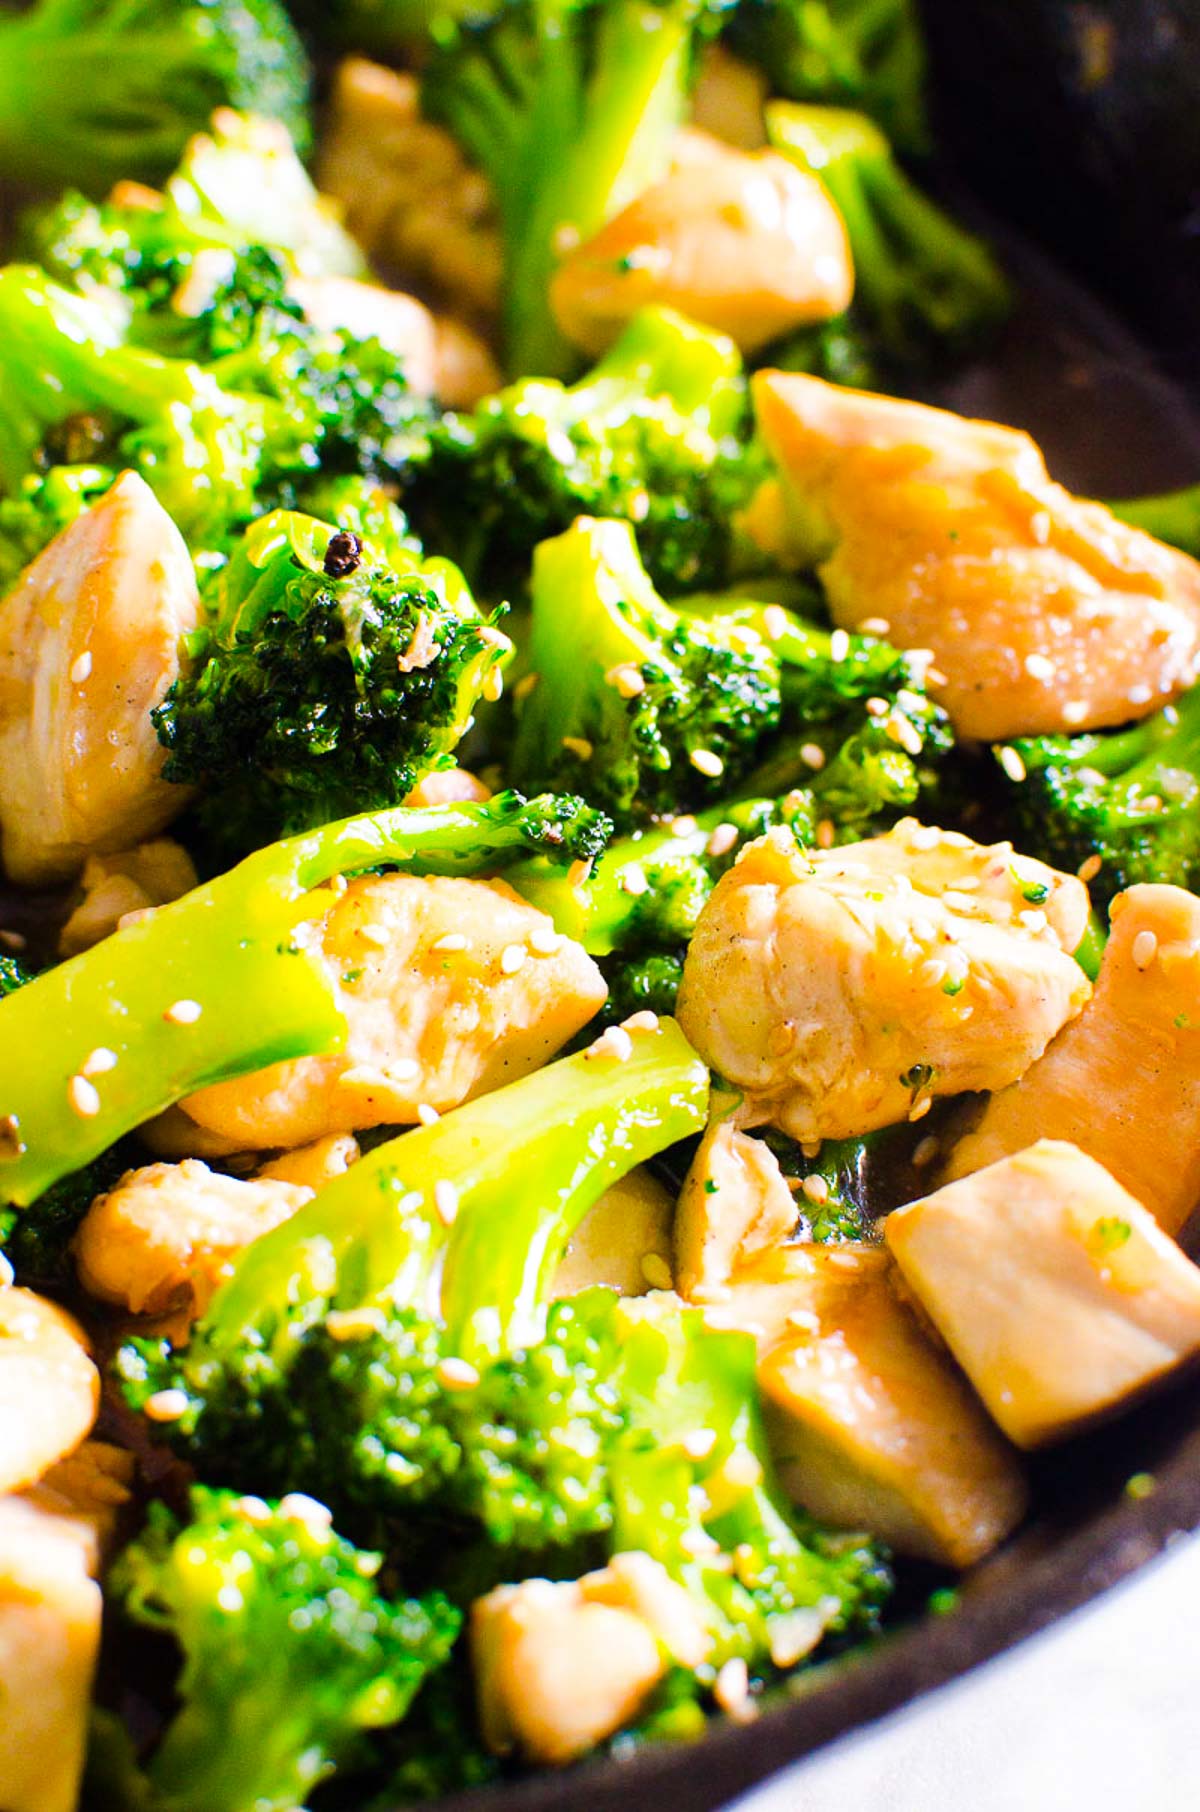 Chicken broccoli stir fry garnished with sesame seeds.